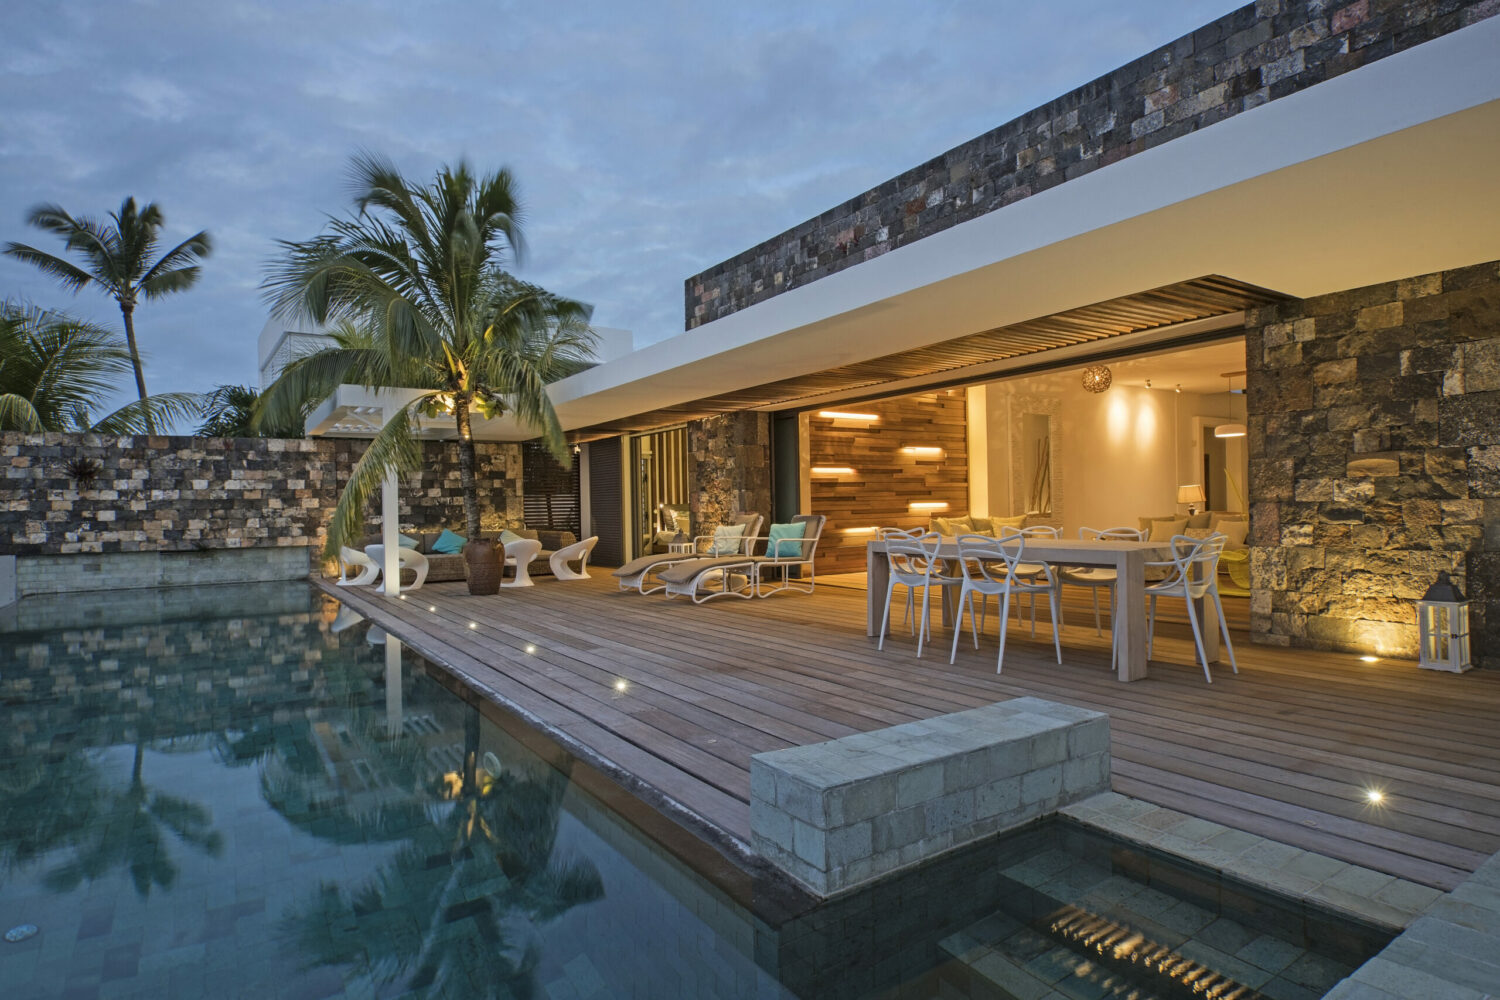 Koudesoley villa villa rental in Mauritius